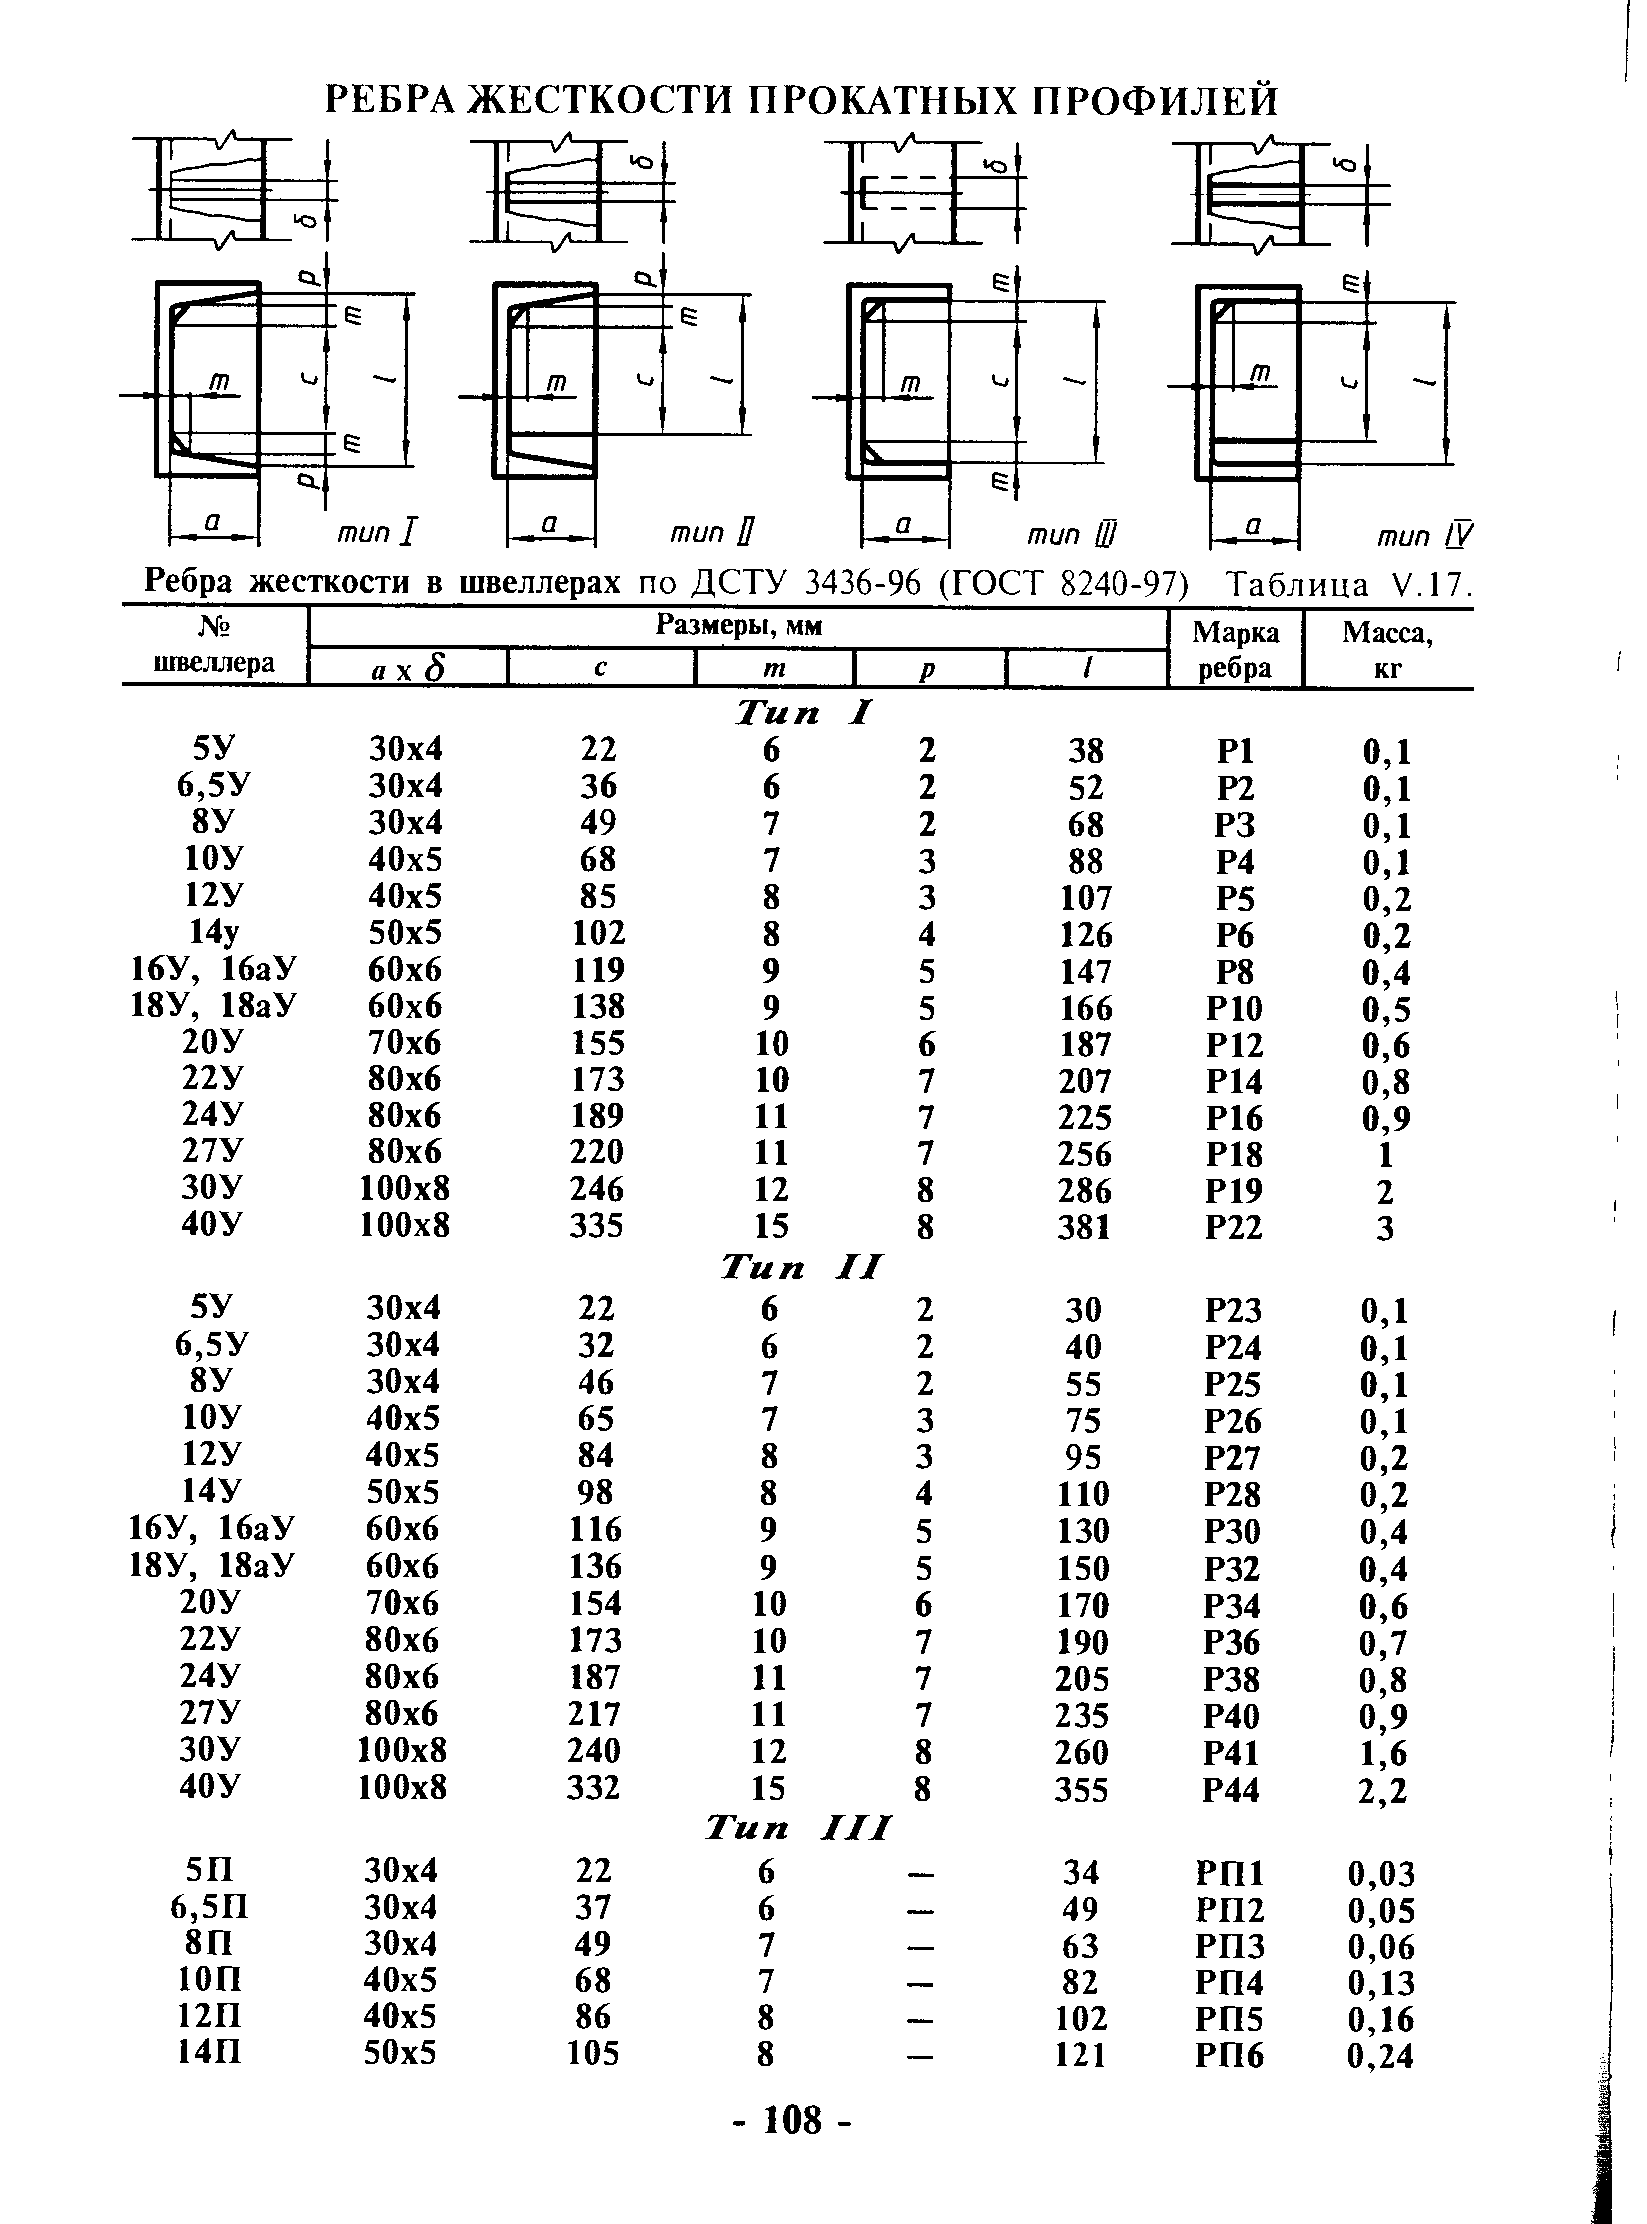 Ребра жесткости в швеллерах по ДСТУ 3436-96 (ГОСТ 8240-97) Таблица V.17.